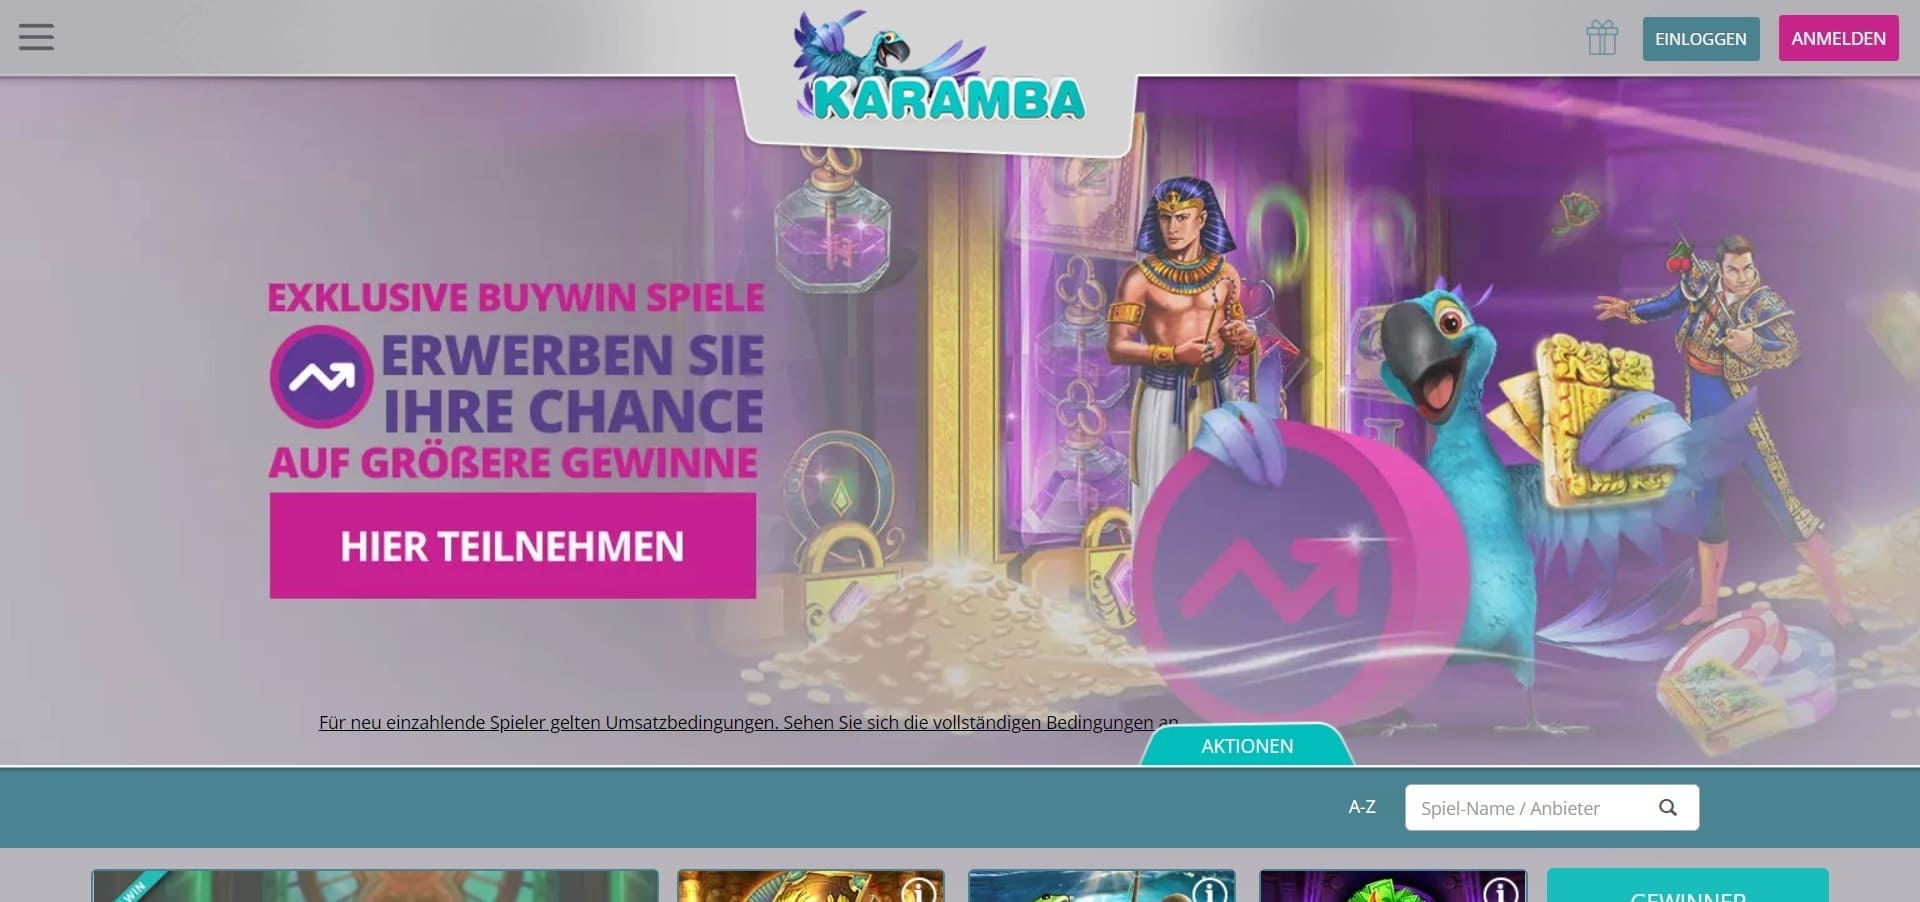 Official website of the Karamba Casino